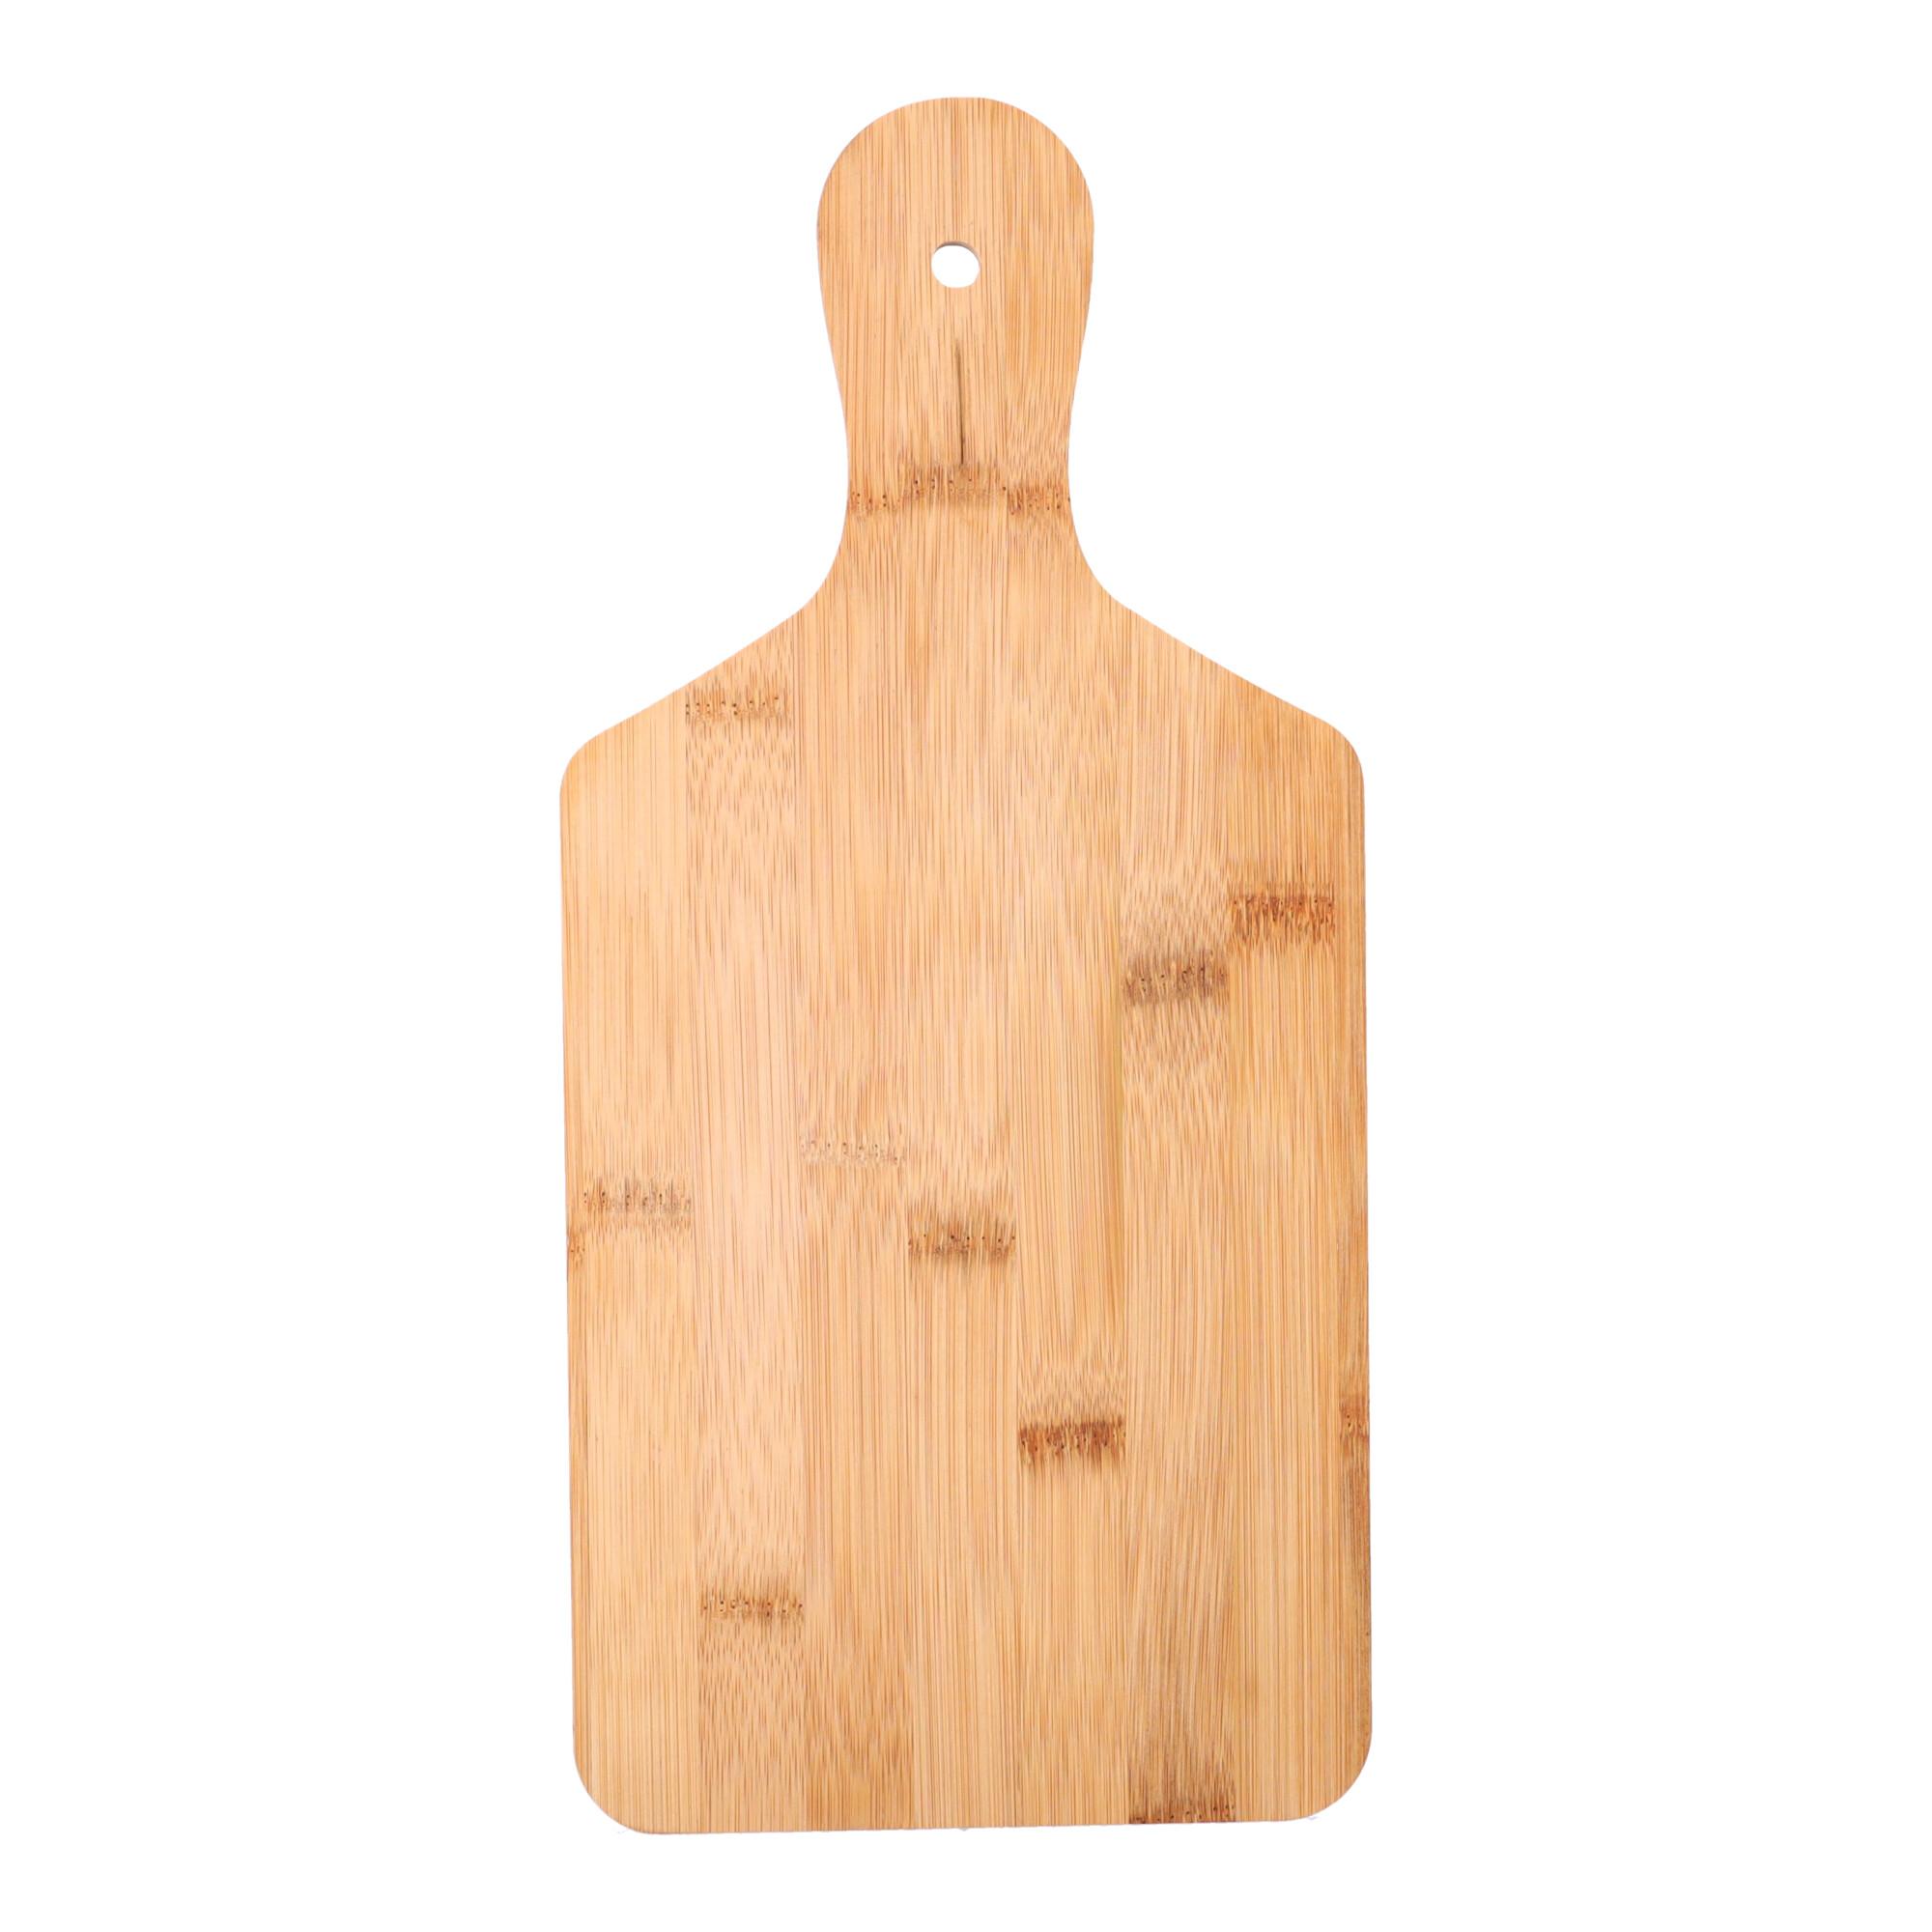 Wooden pizza board - rectangular, small